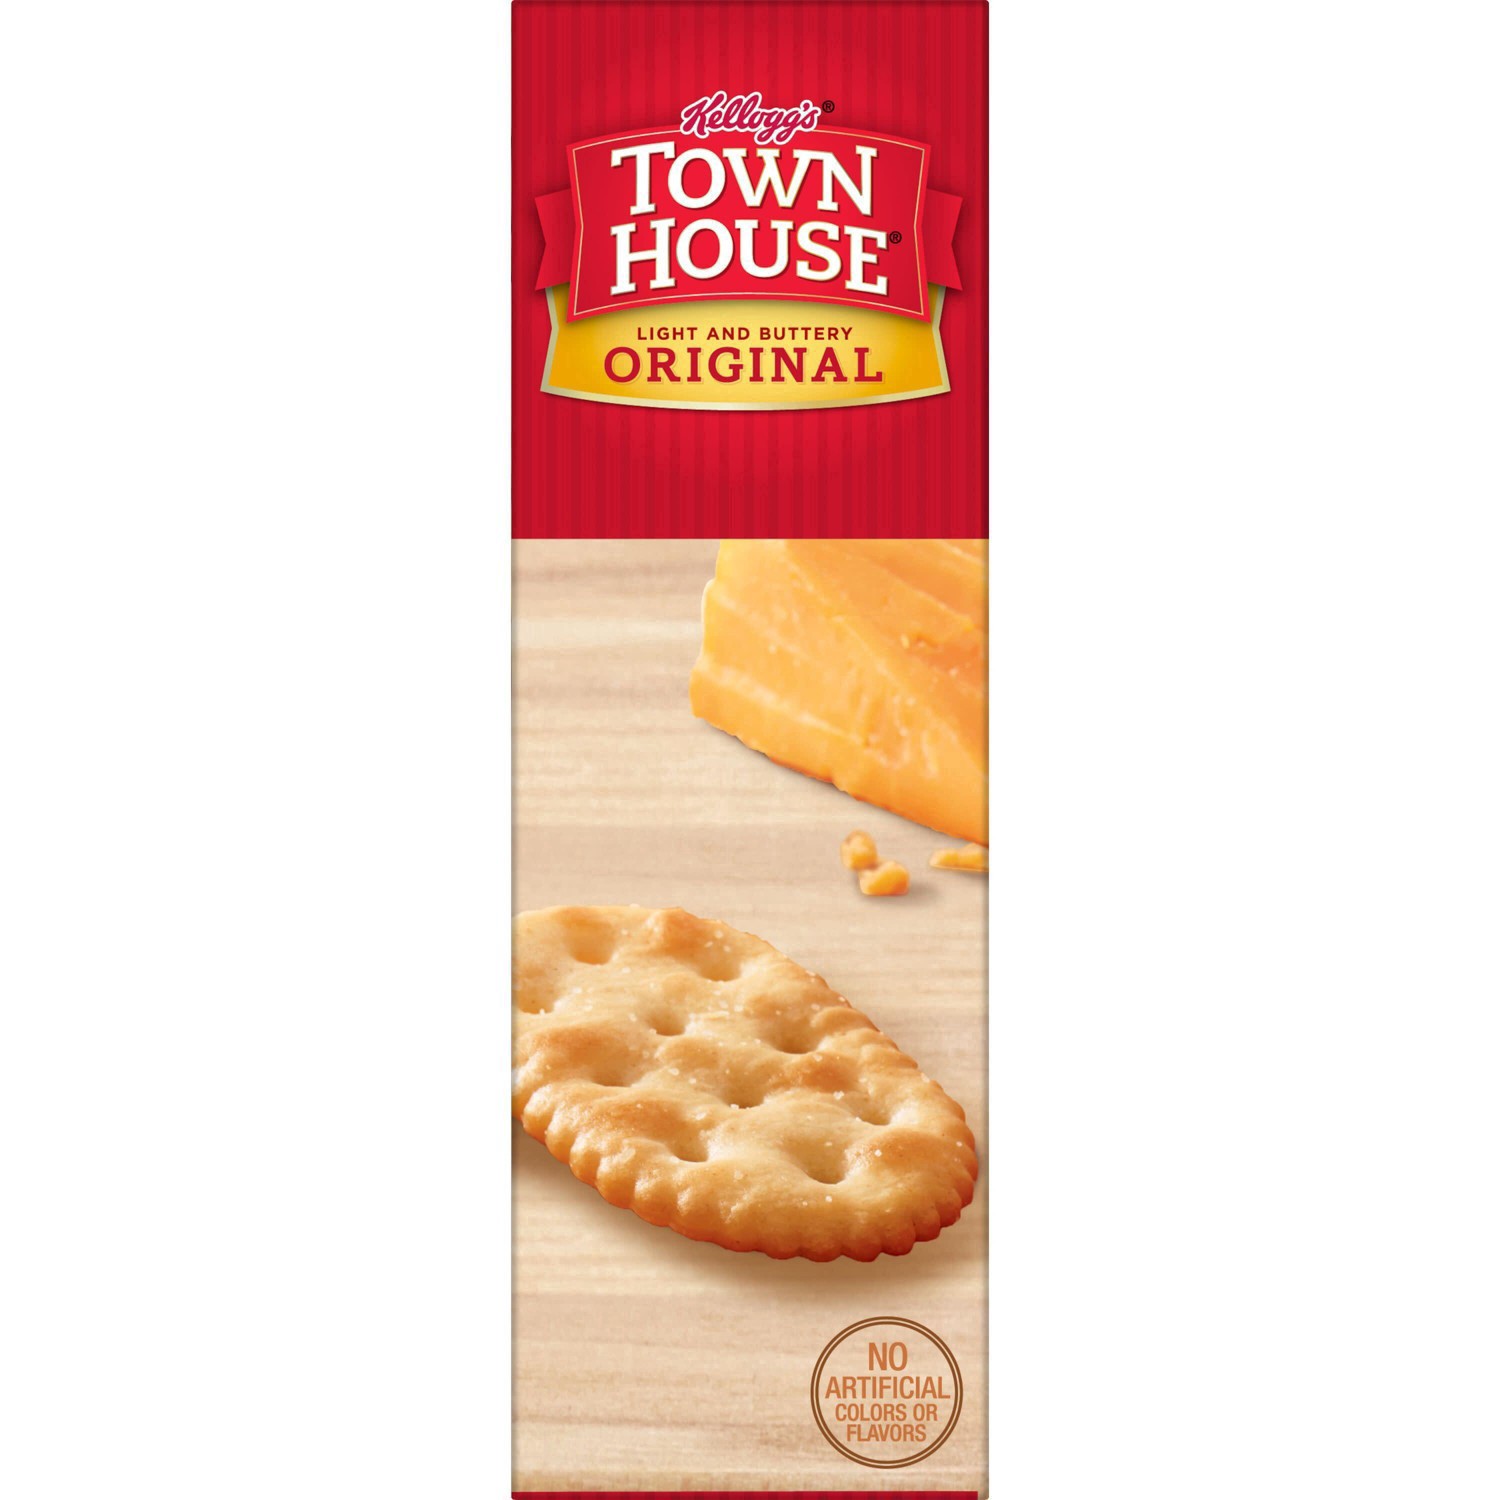 slide 77 of 101, Town House Kellogg's Town House Original Snack Crackers - 13.8oz, 13.8 oz